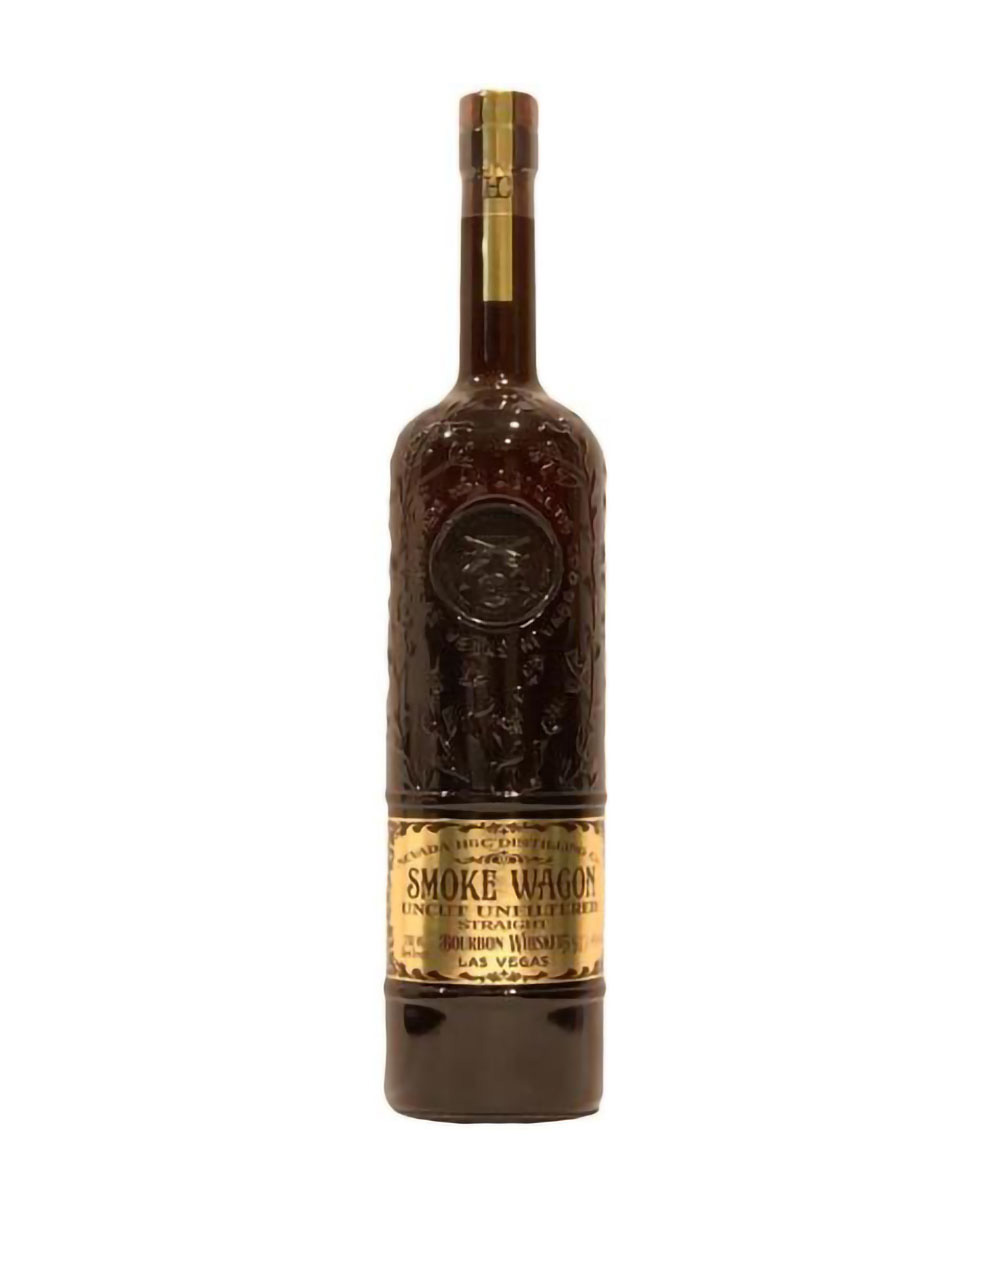 A.H. Hirsch 8 Year Old Small Batch High Rye Bourbon Whiskey